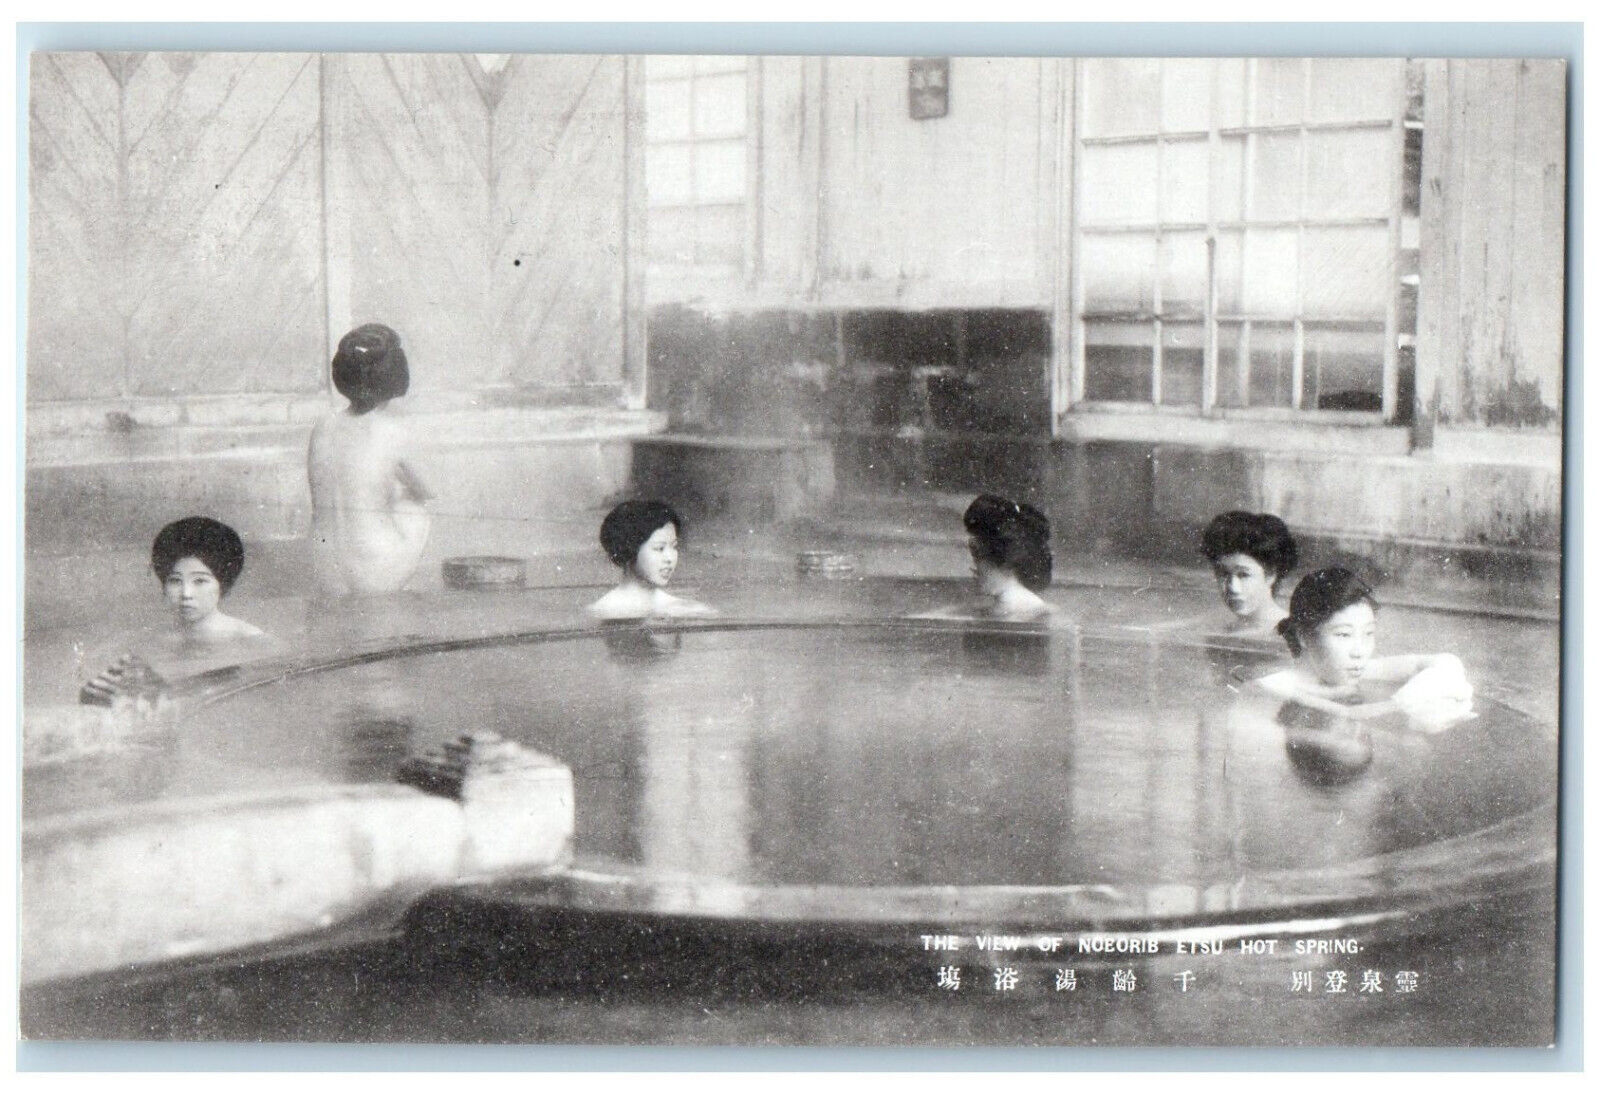 c1920's The View of Noeorib Etsu Hot Spring Japan Women Bathing Postcard